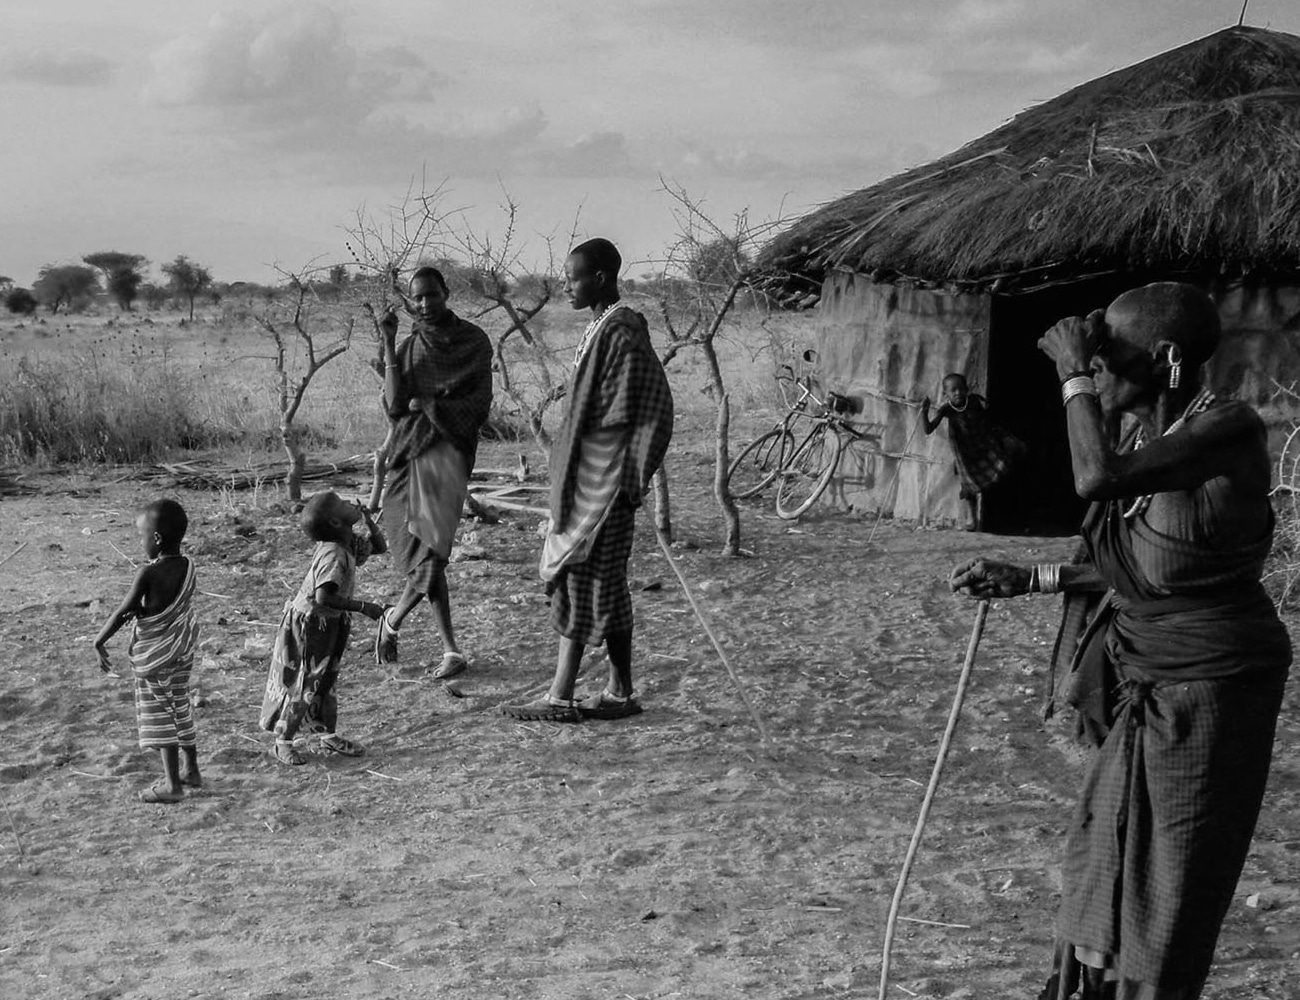 People of the Maasai Village